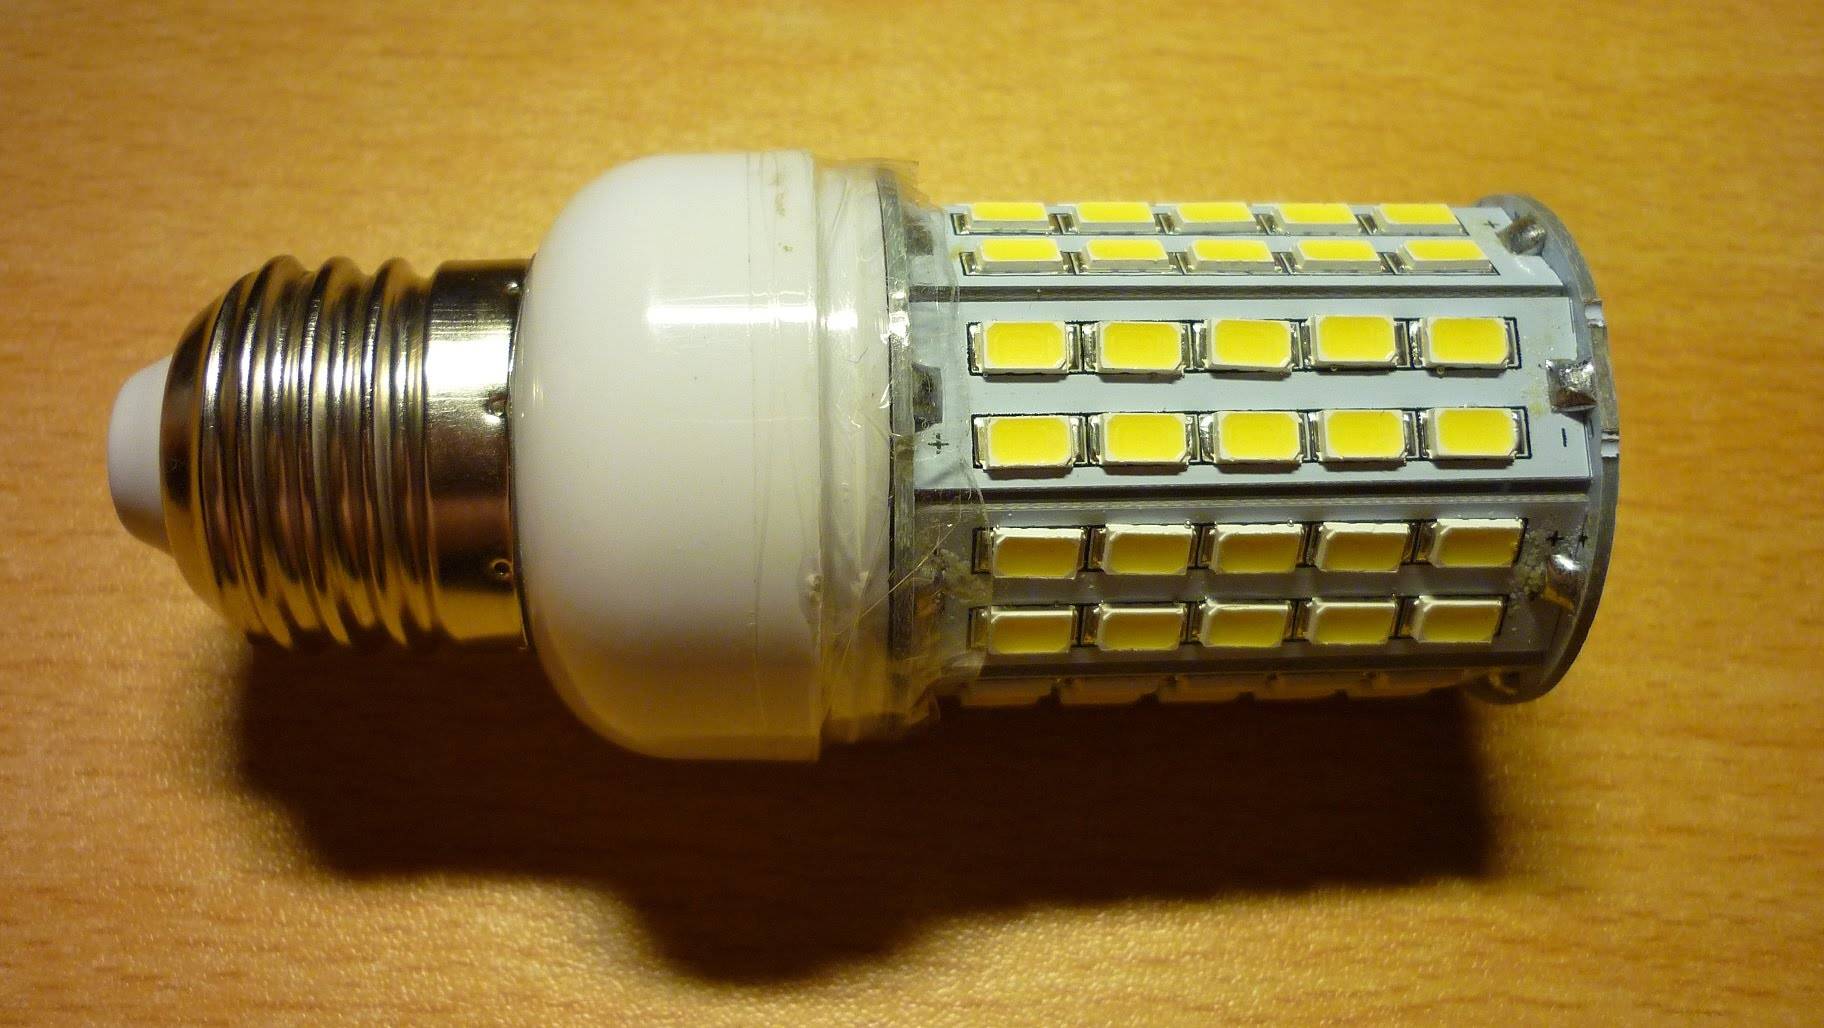 Сильно греется светодиодная. Перегорела светодиодная лампа ip65. Мощная светодиодная лампа. Перегоревшая светодиодная лампа. Перегоревшая led лампа.